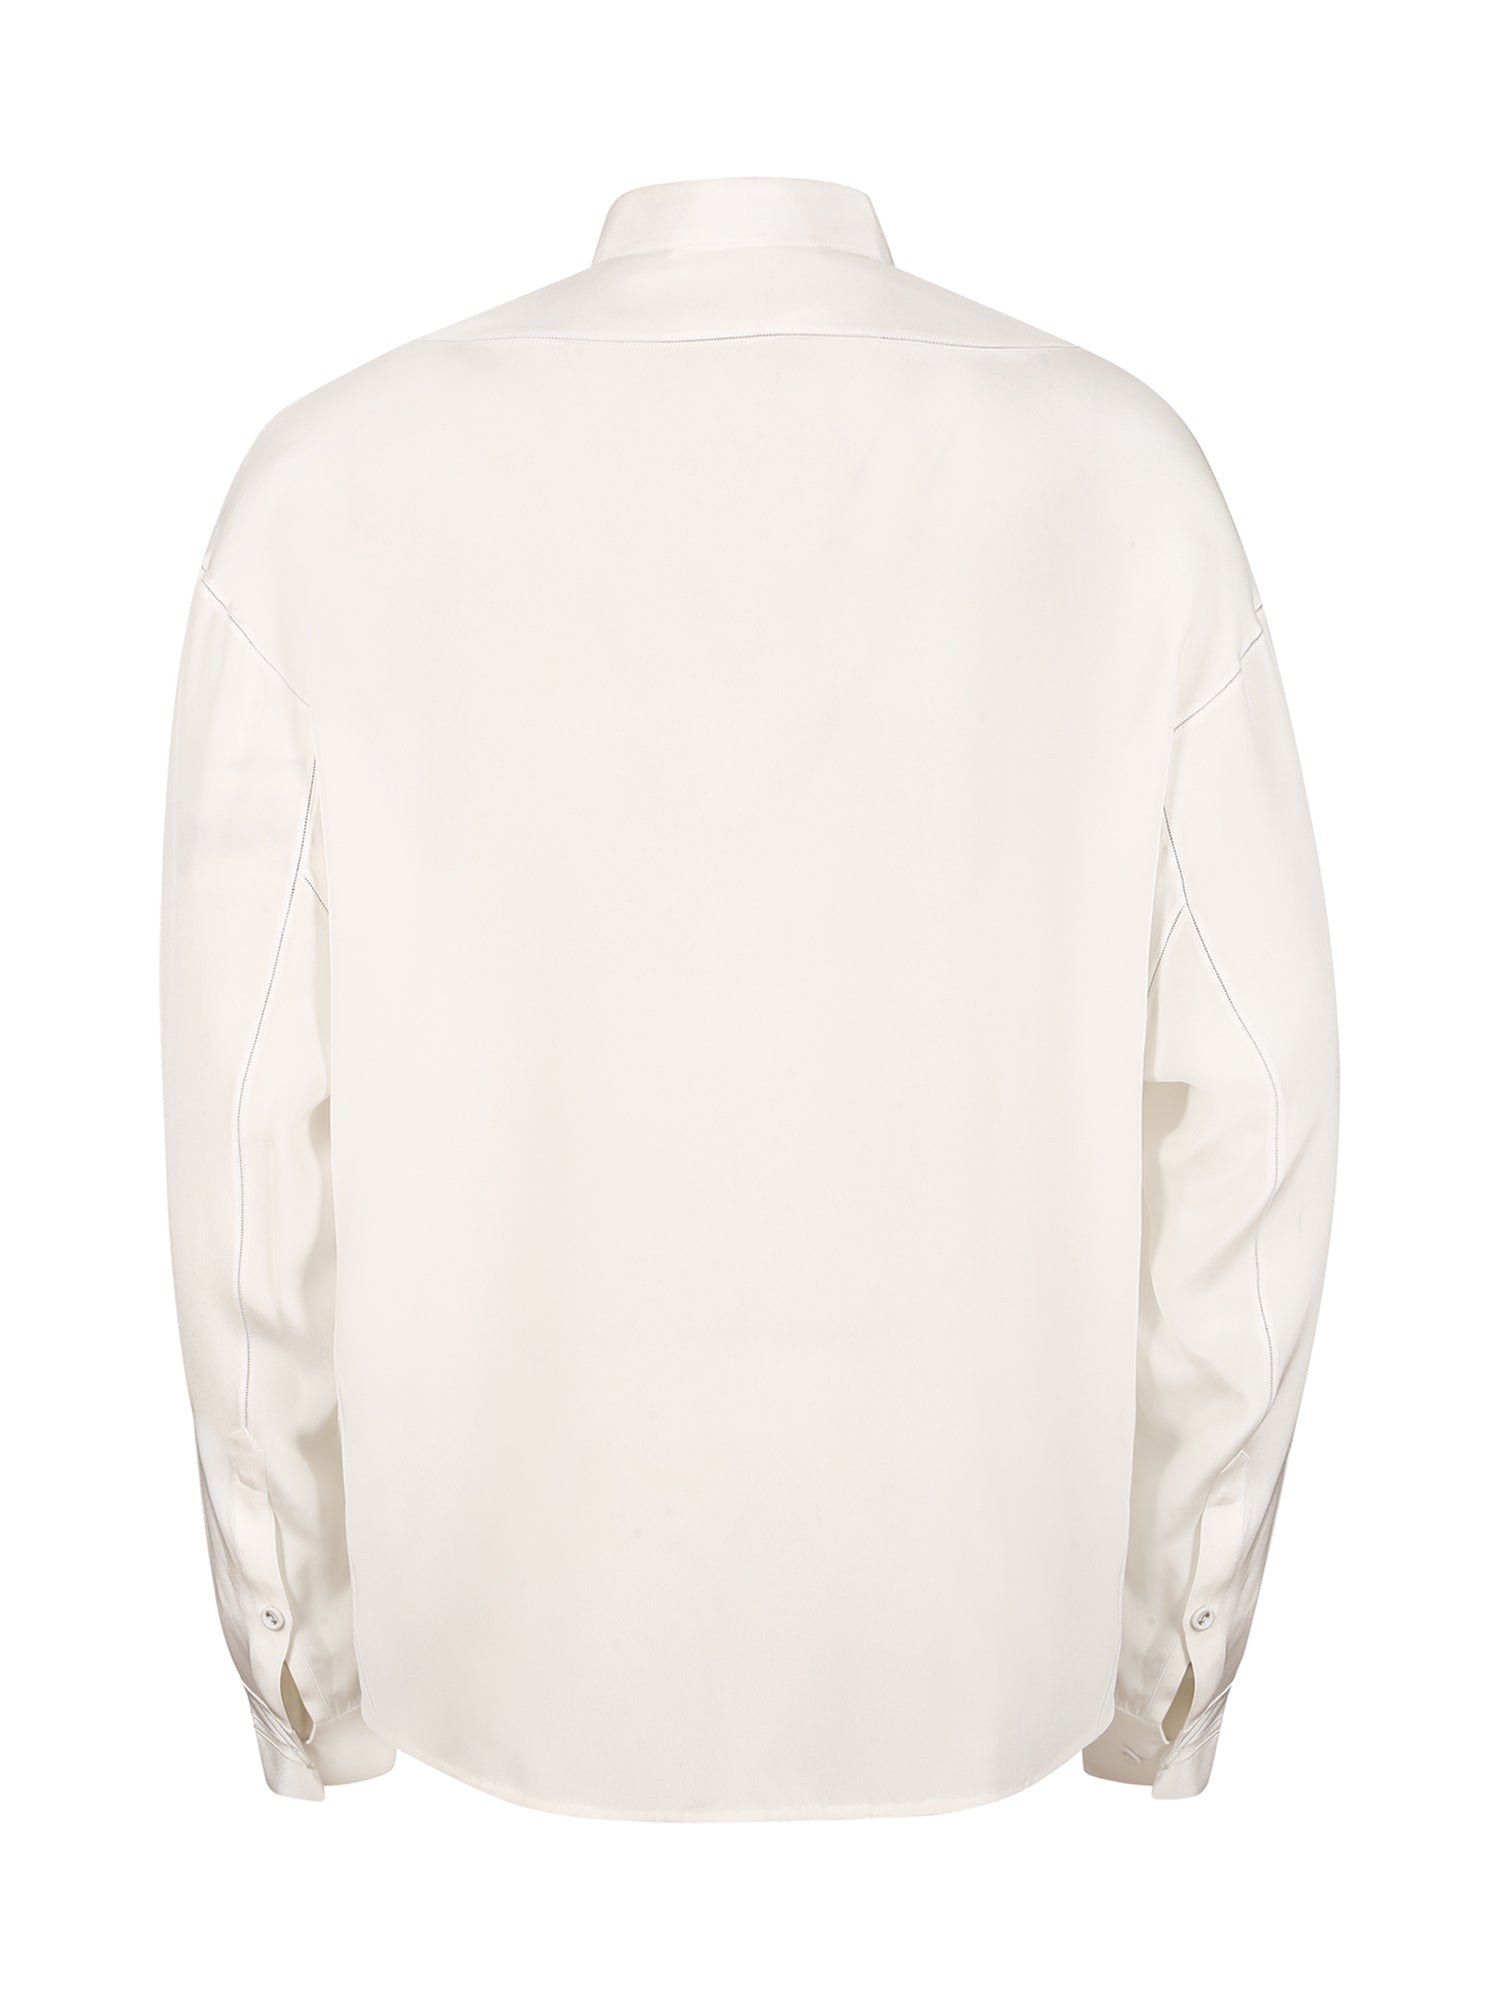 Drop shoulder white crepe shirt